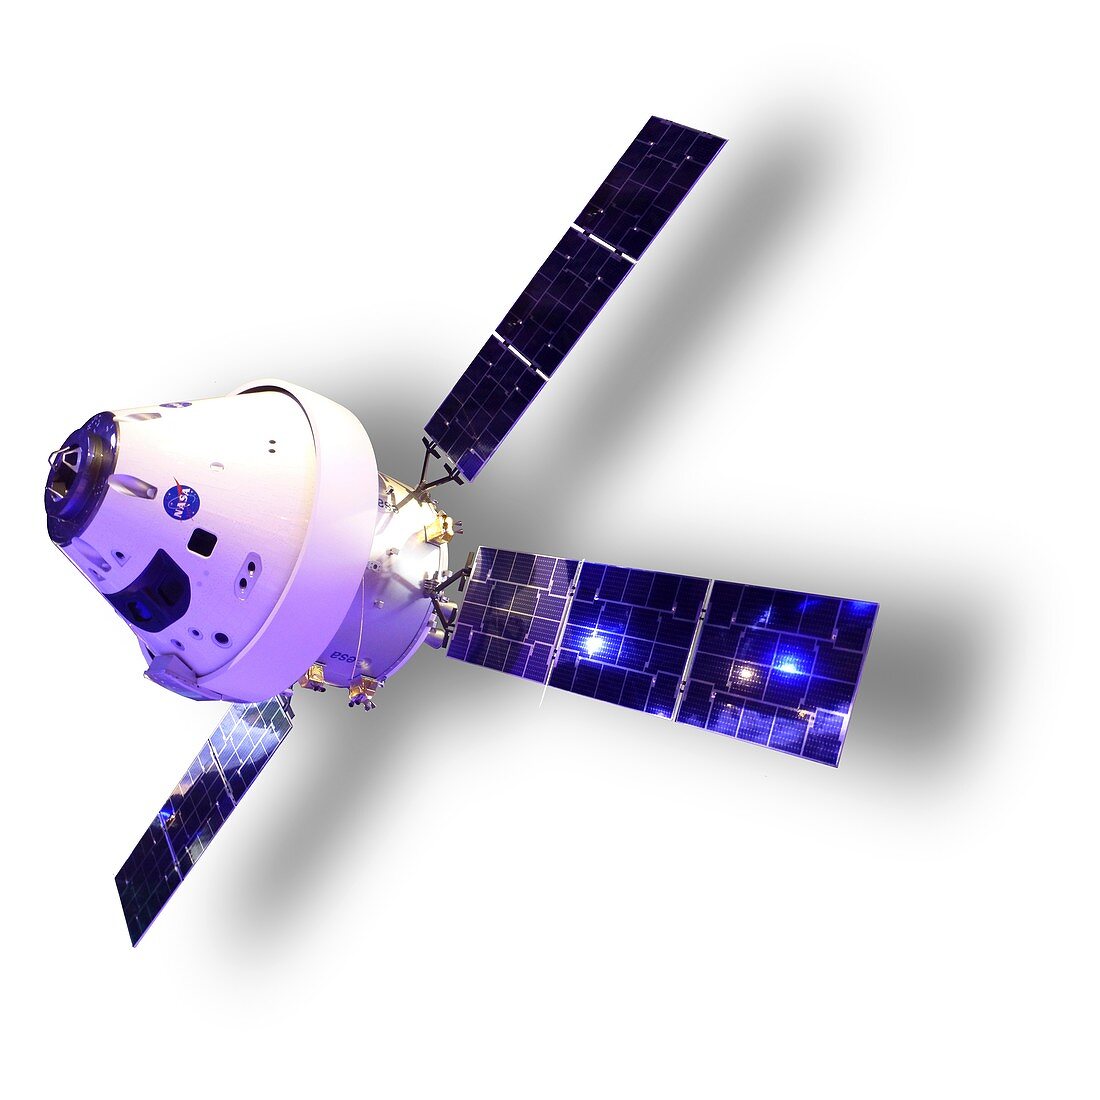 Orion Spacecraft with ESA Service Module